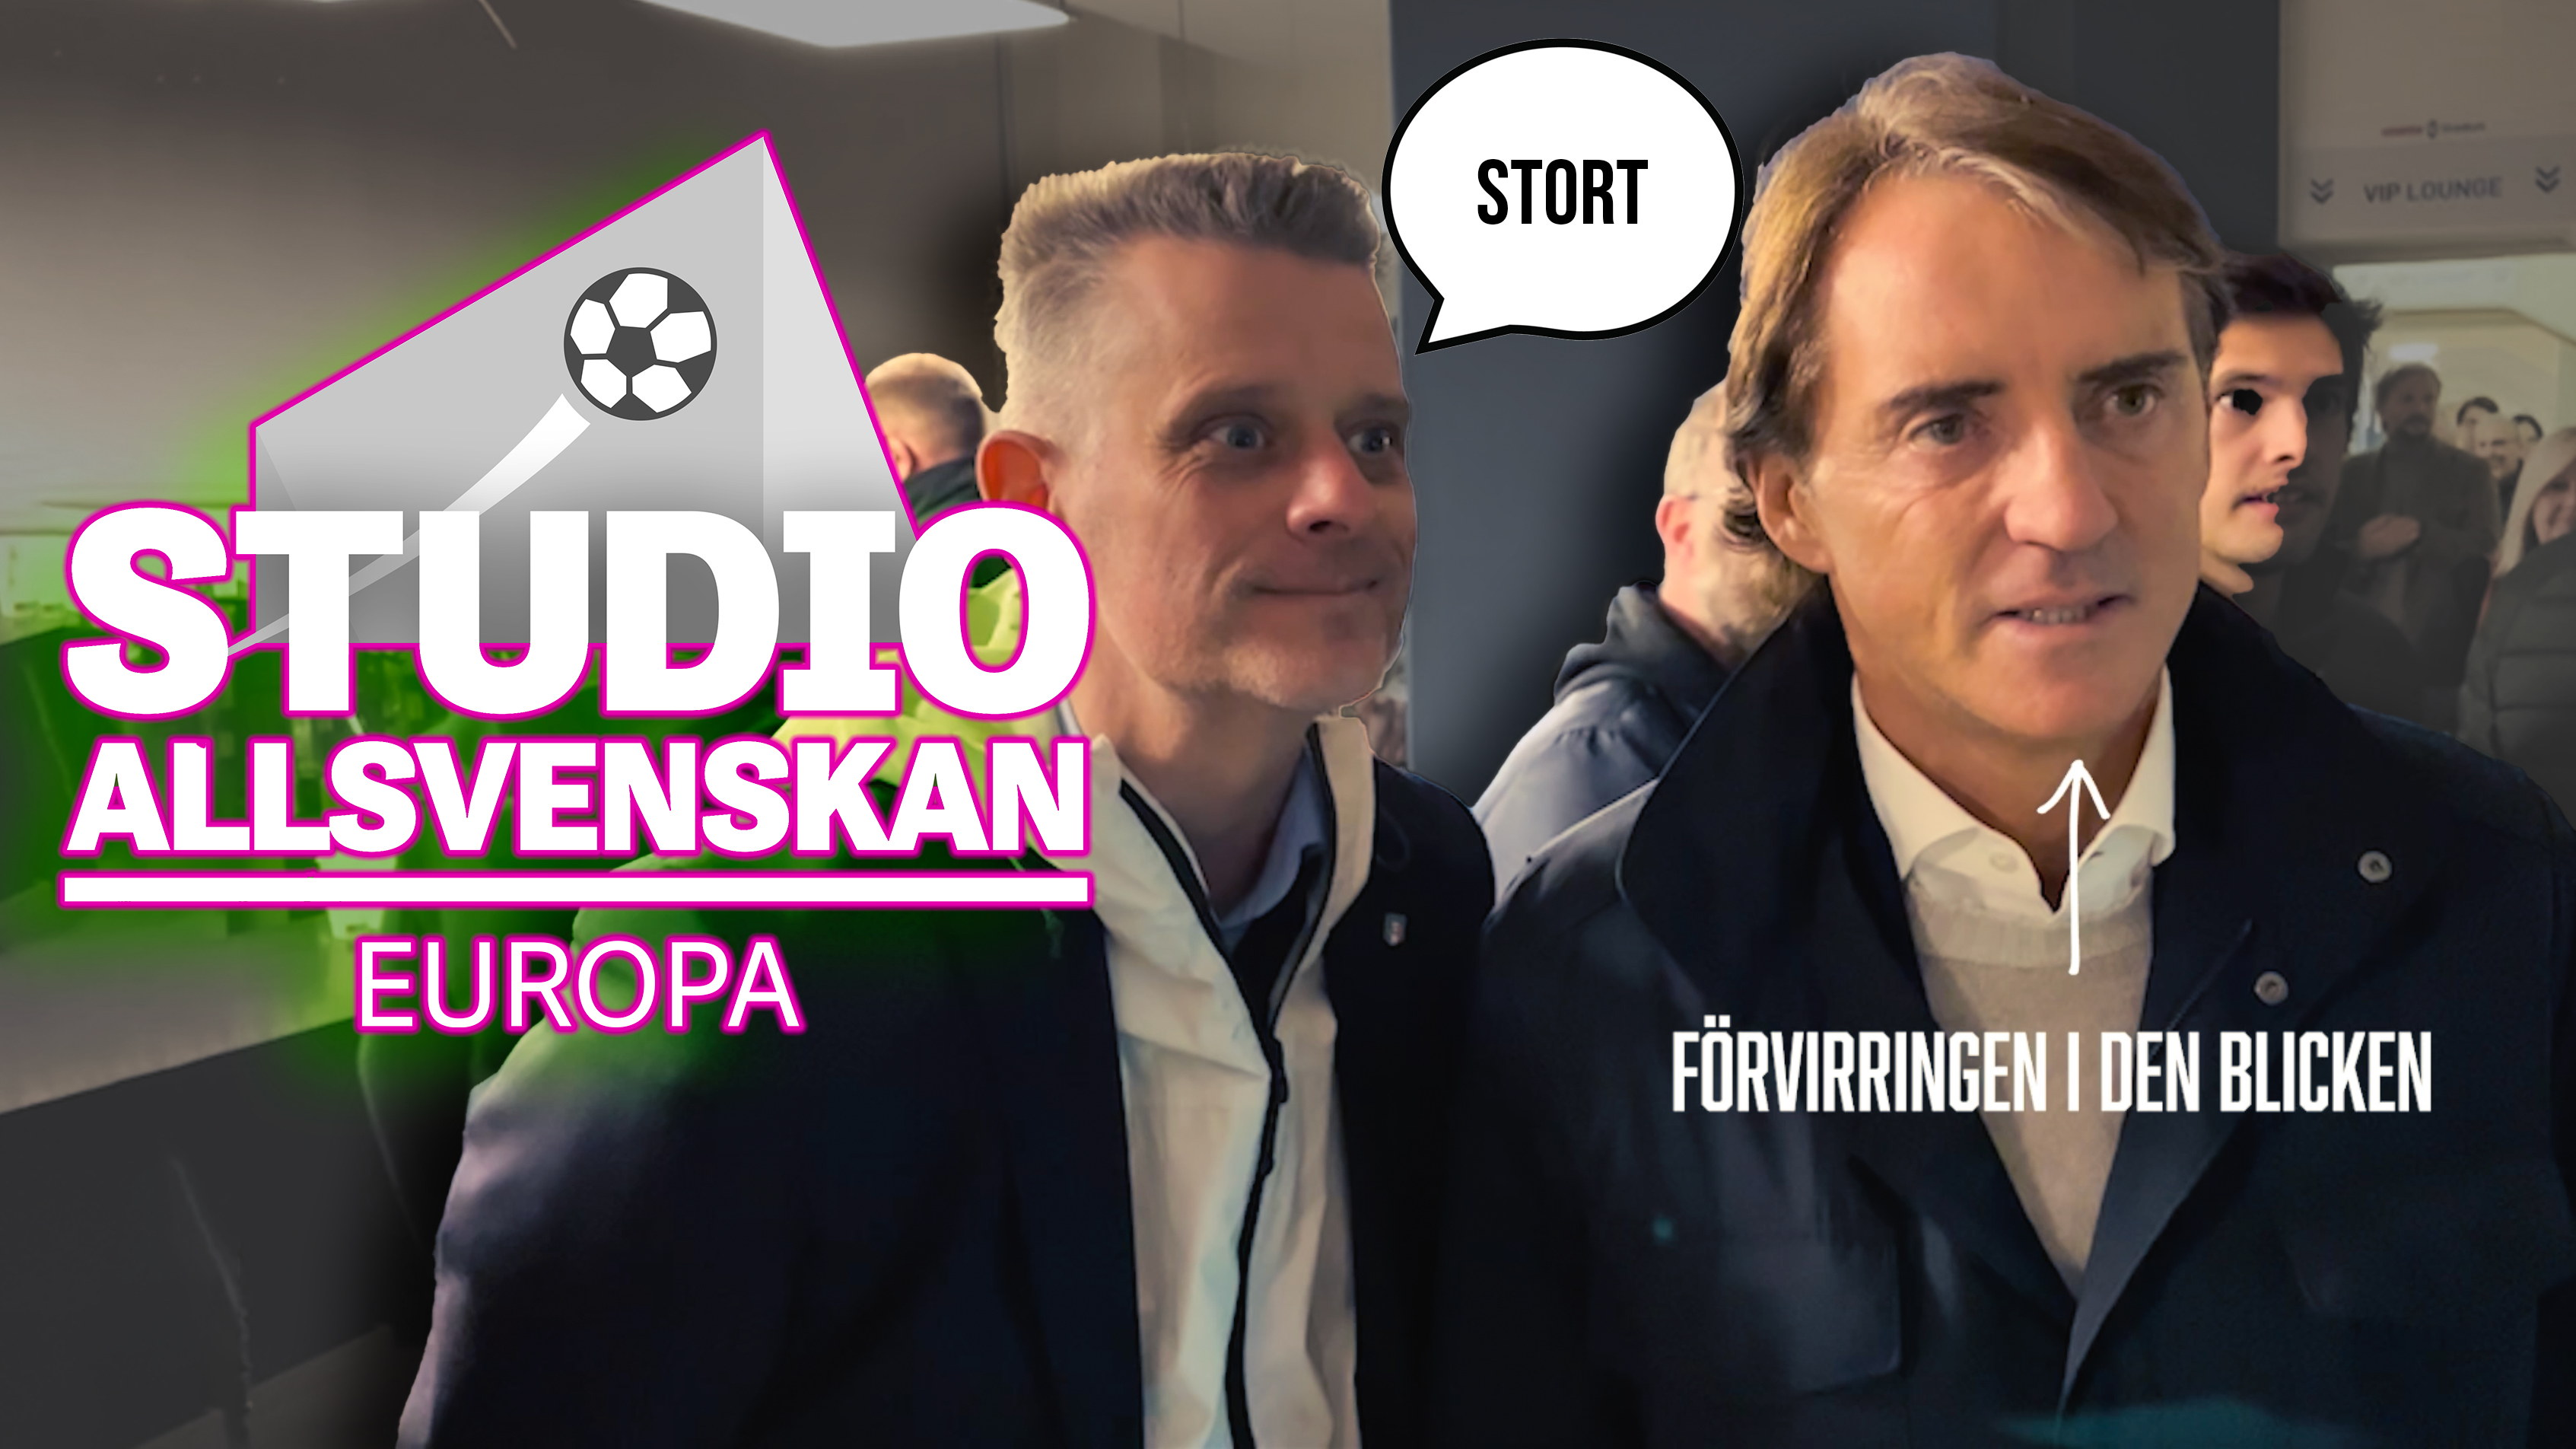 Atalanta, Napoli, Marcus Birro, serie a, Roberto Mancini, Studio Allsvenskan Europa, Studio Allsvenskan